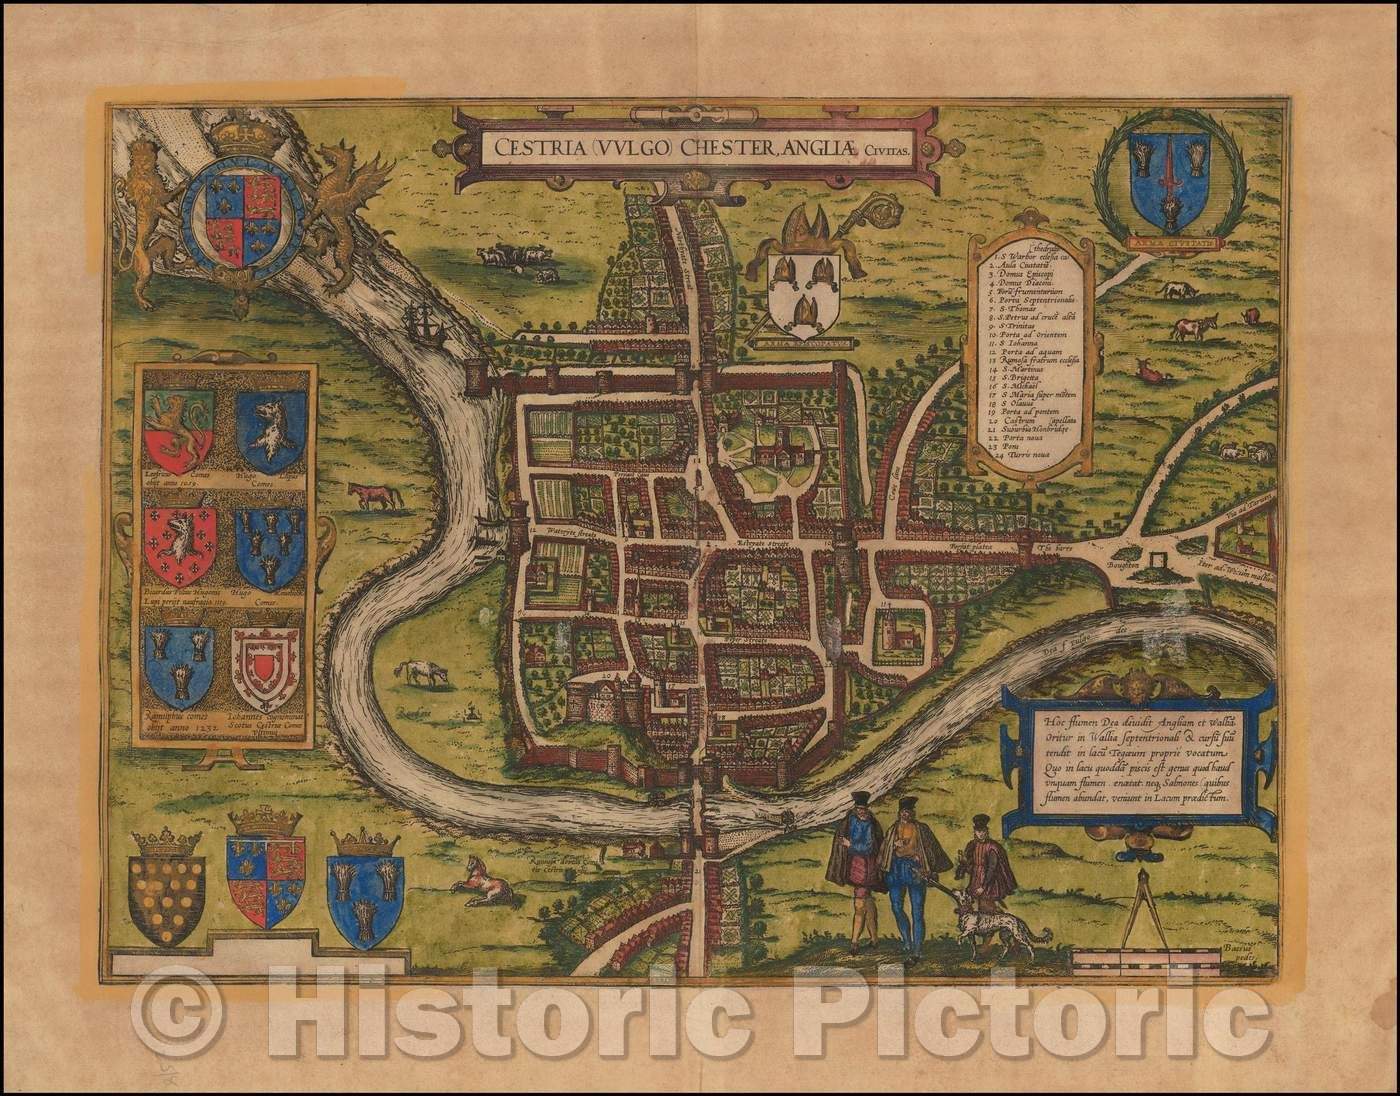 Historic Map - Cestria Vulgo Chester, Angliae Civitas, 1572, Georg Braun v2